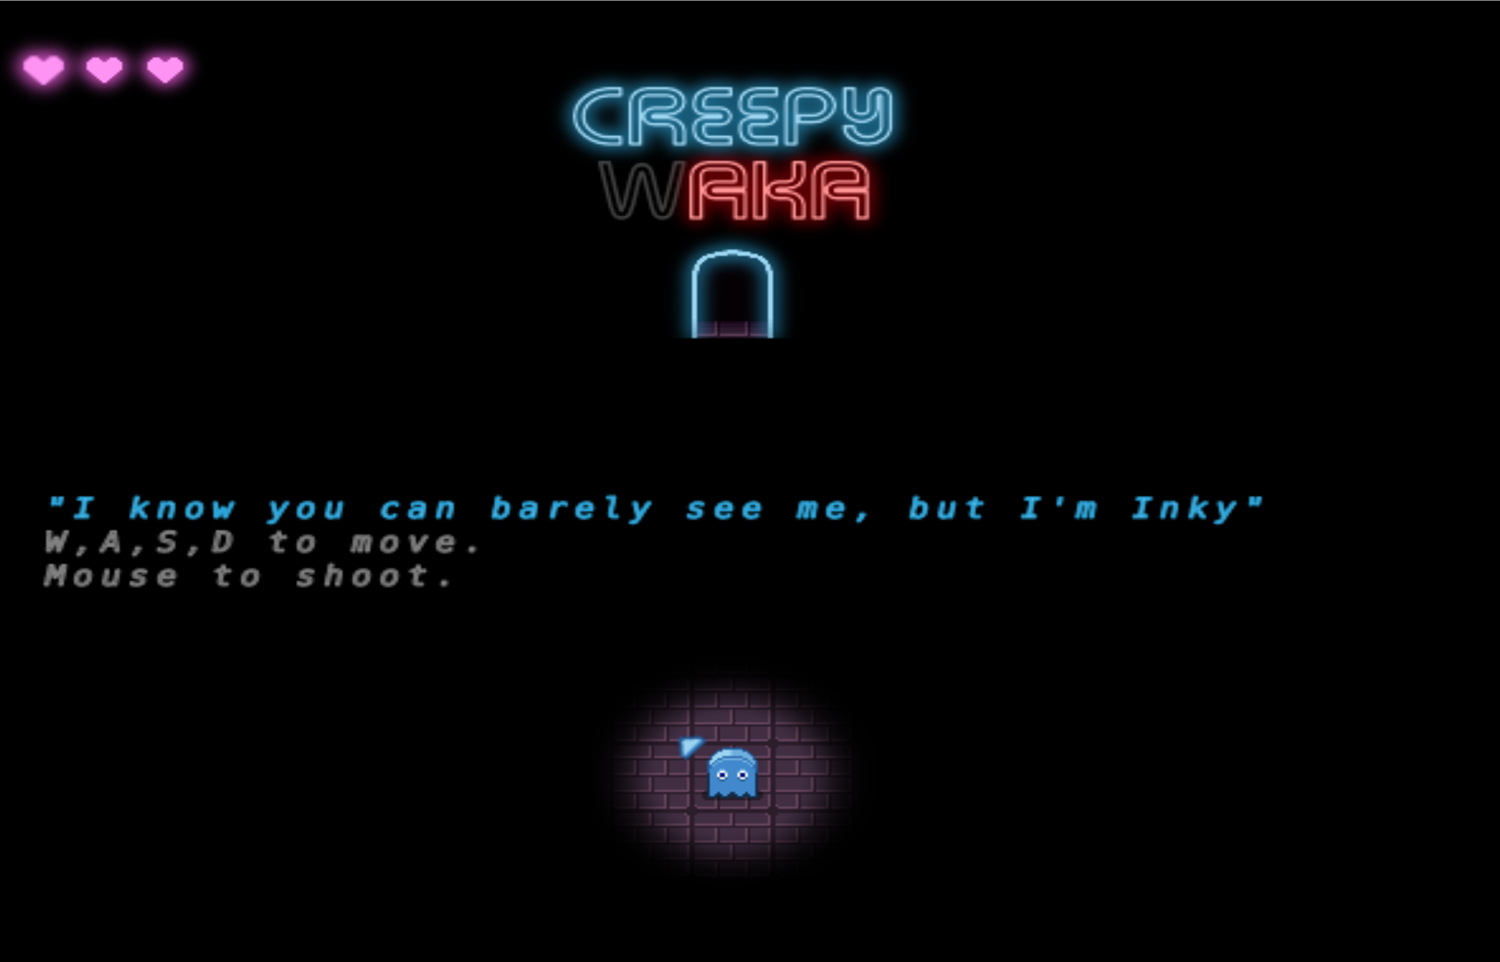 Creepy Waka Game Welcome Screen Screenshot.